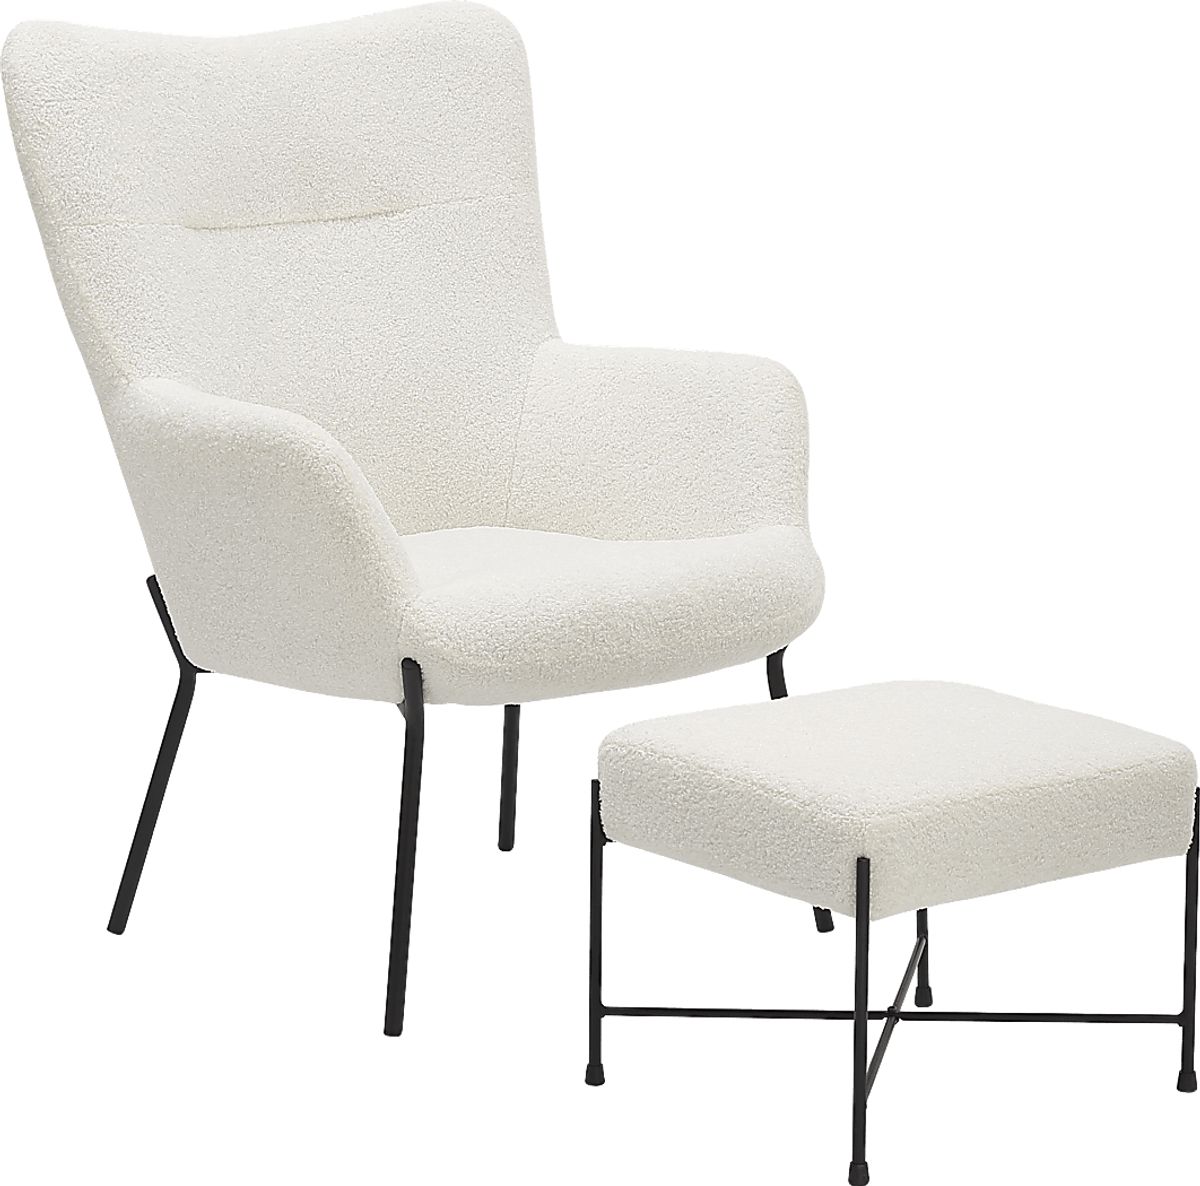 Morlaix White Accent Chair With Ottoman 18324347 Image Item?cache Id=dacc77498729285298971f535e0ef311&w=1200